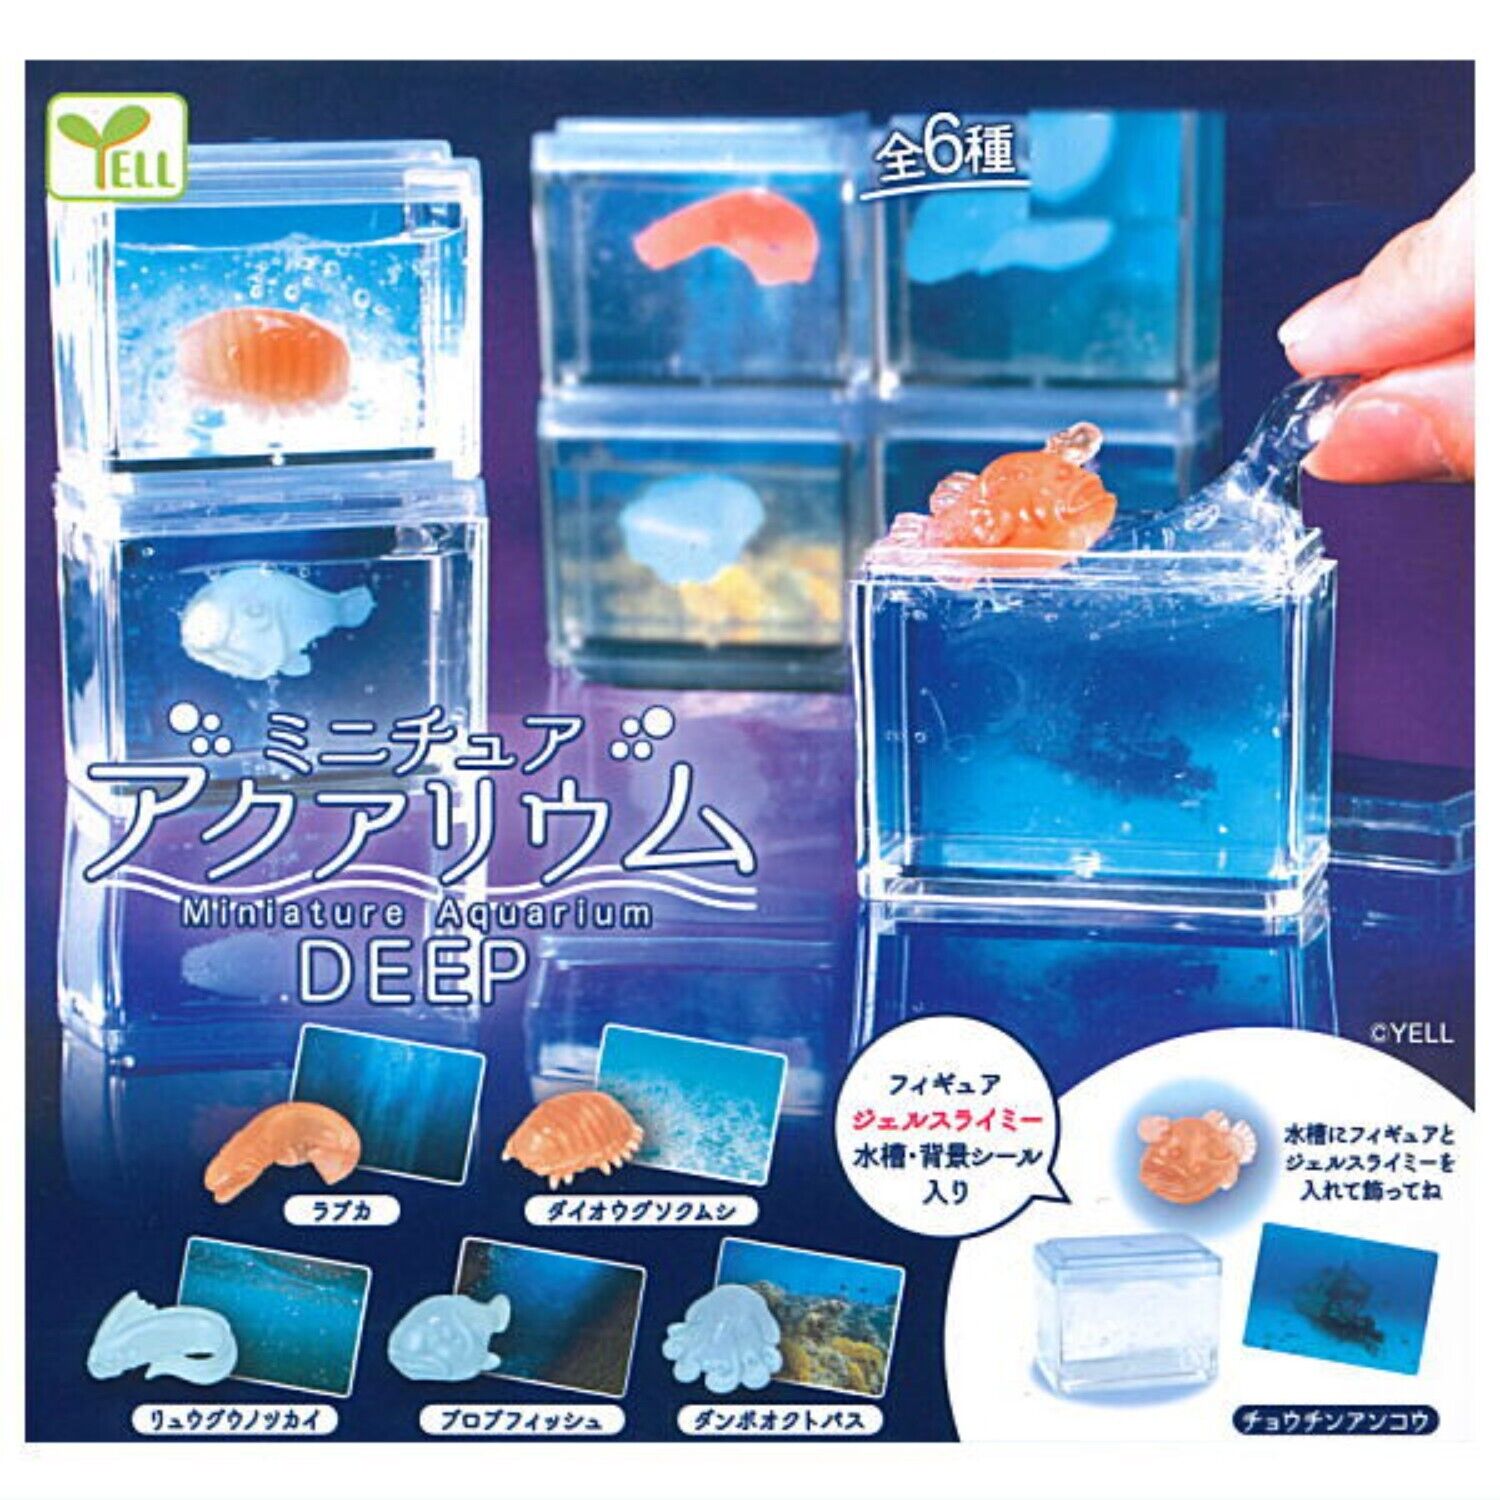 miniature aquarium DEEP Mascot Capsule Toy 6 Types Full Comp Set Gacha New Japan